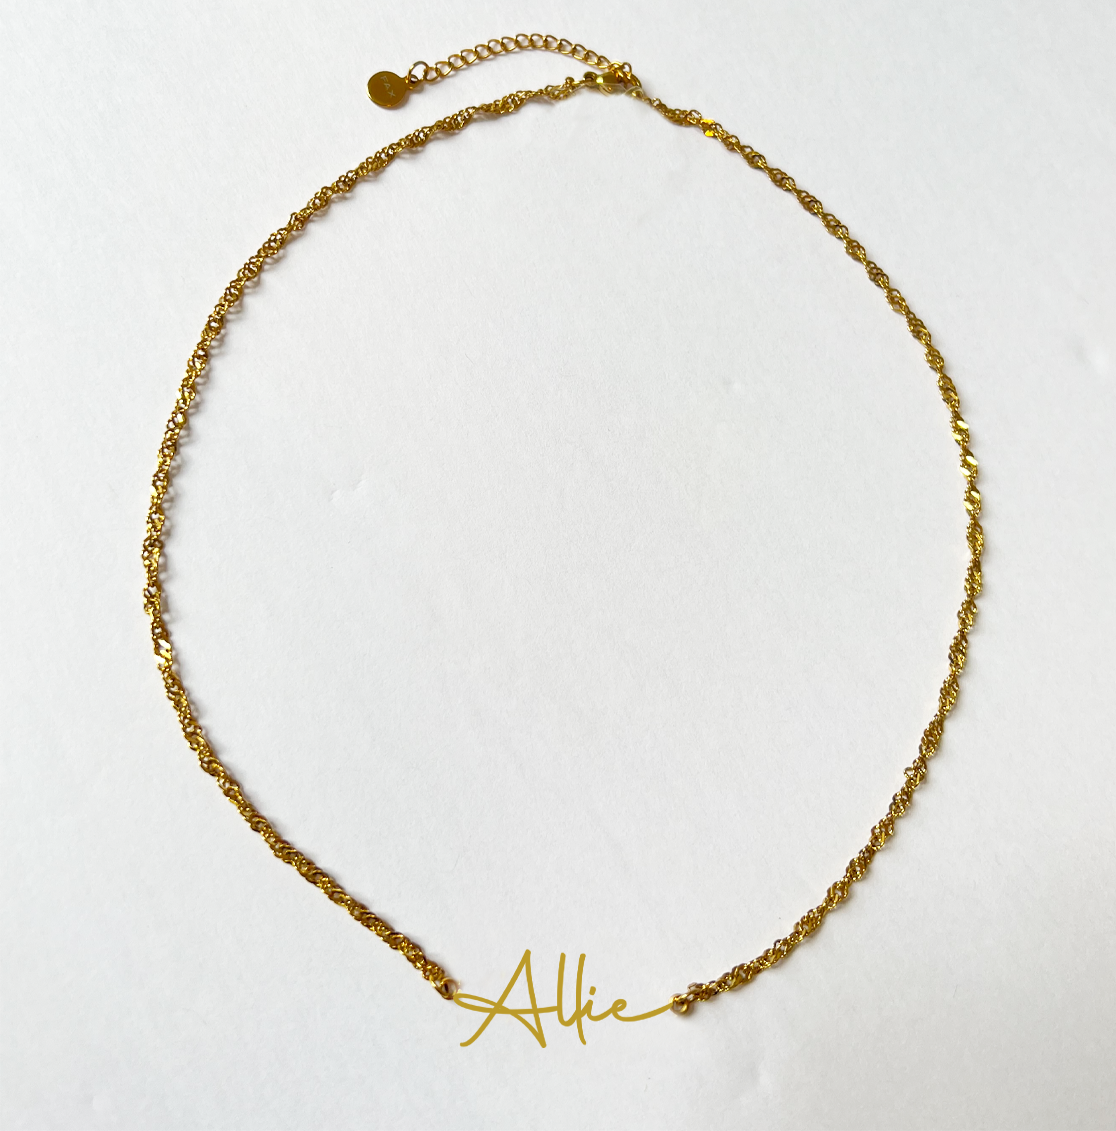 Custom Design Necklace: Allie